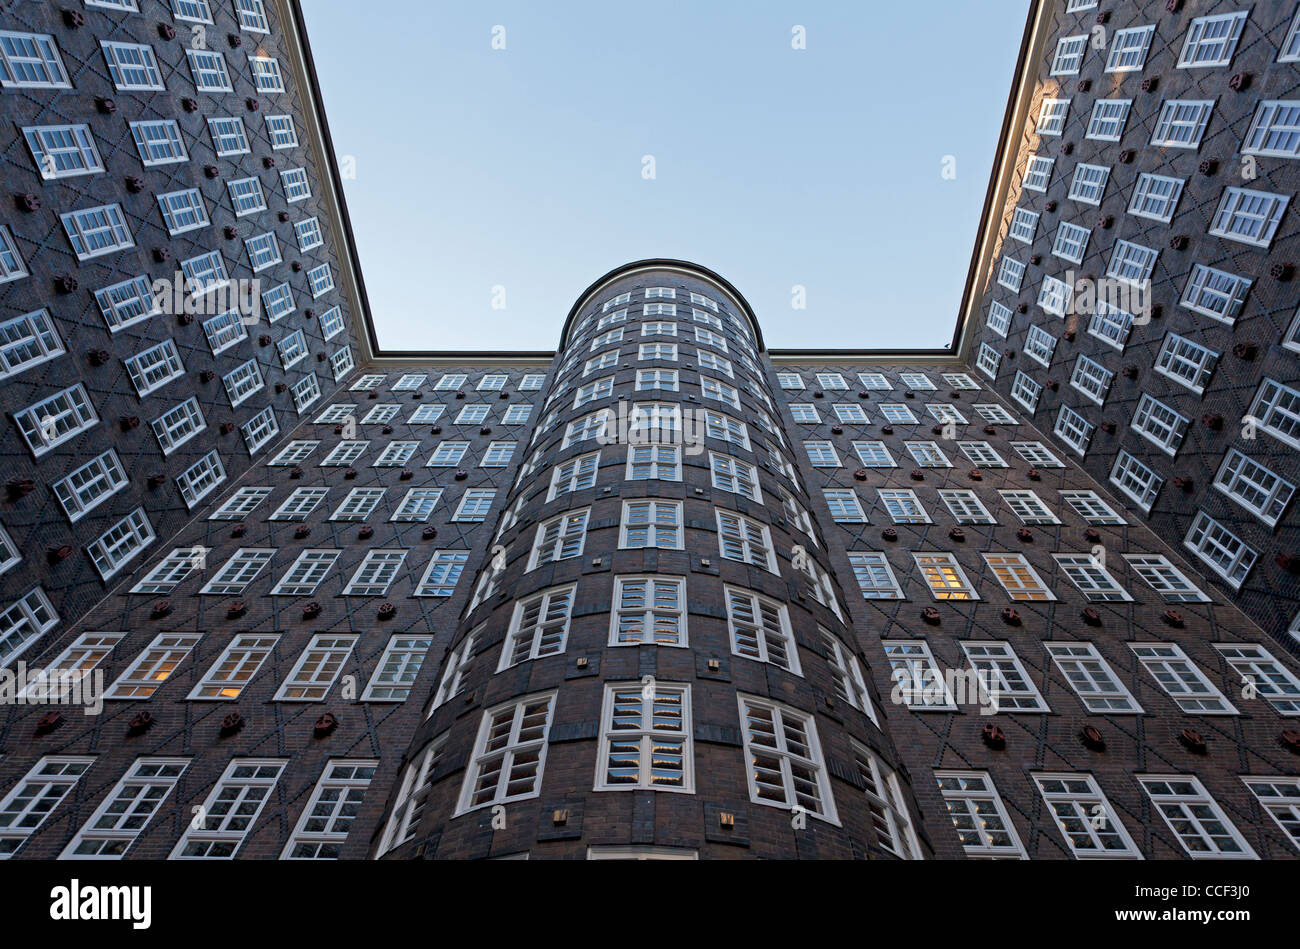 Architecture in Hamburg, Germany Stock Photo